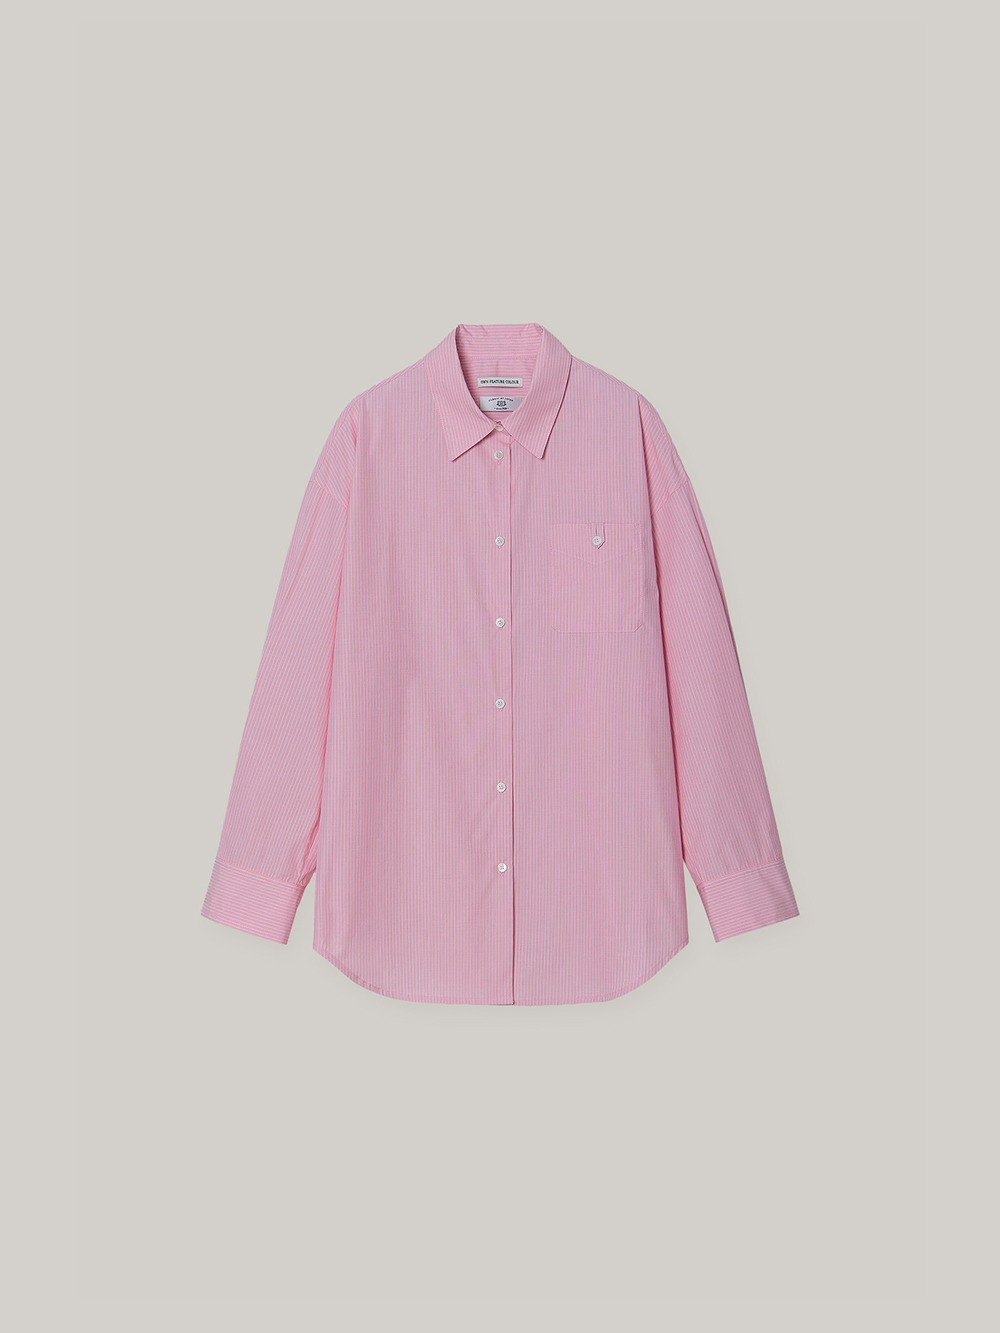 Over Stripe Shirt (pink)